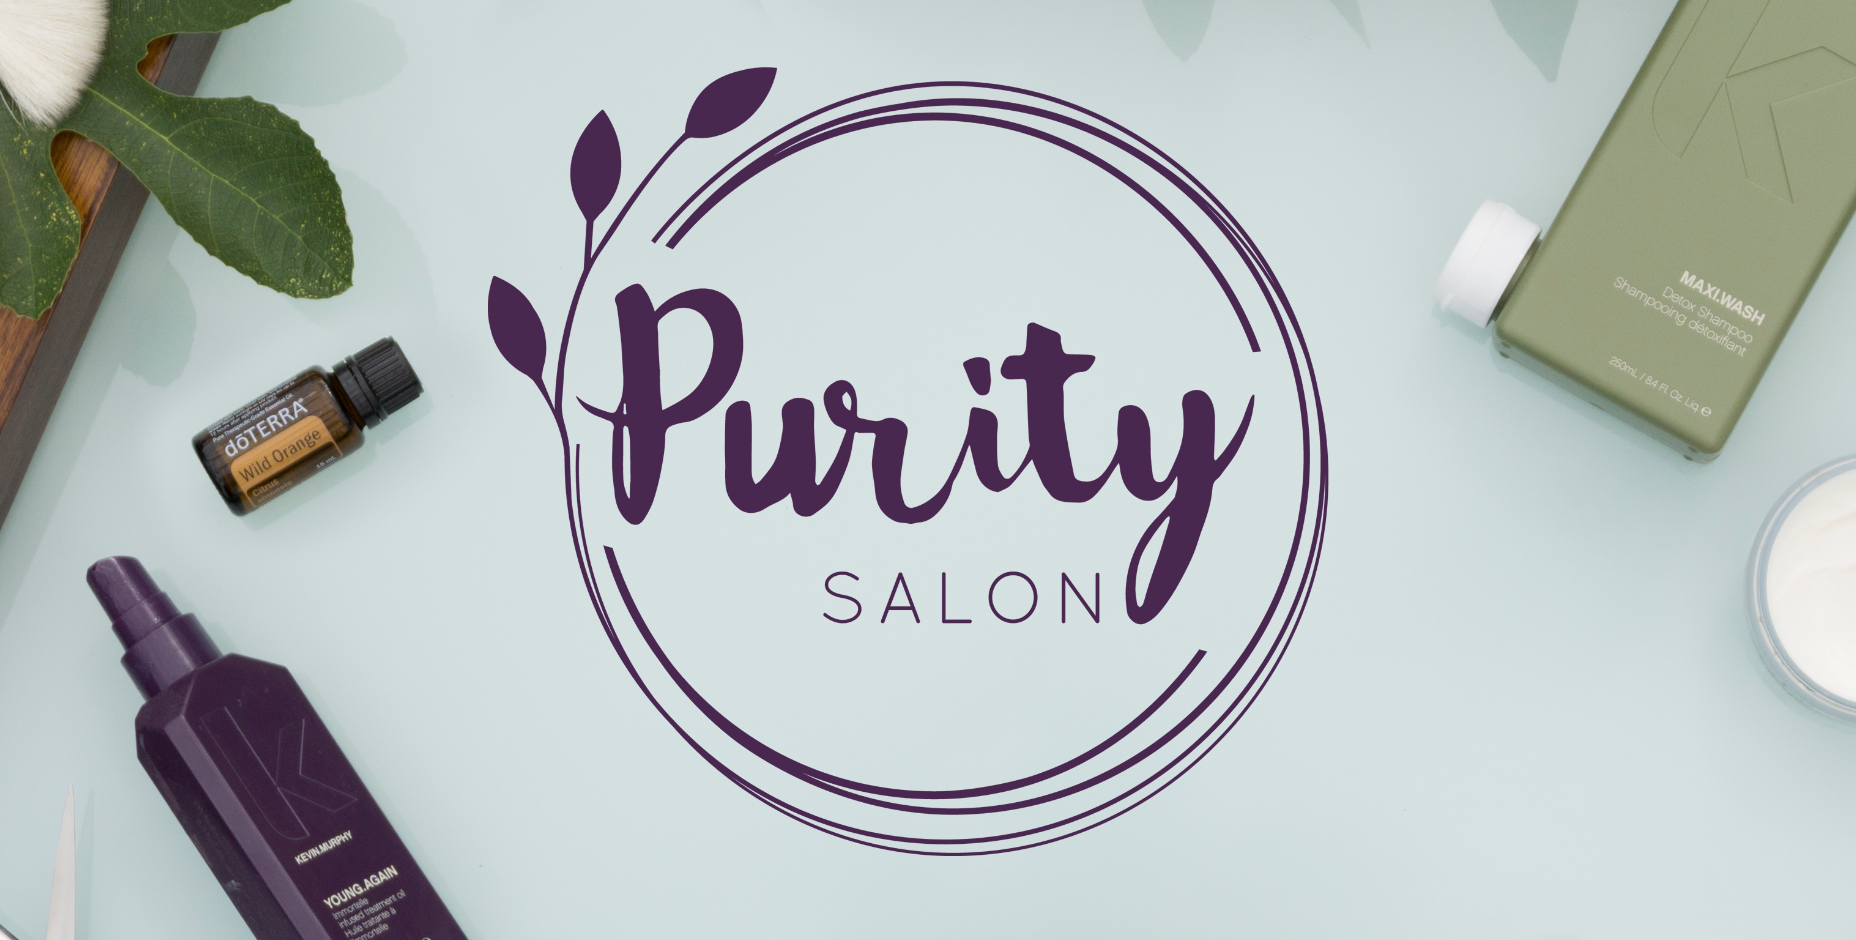 Purity Logo